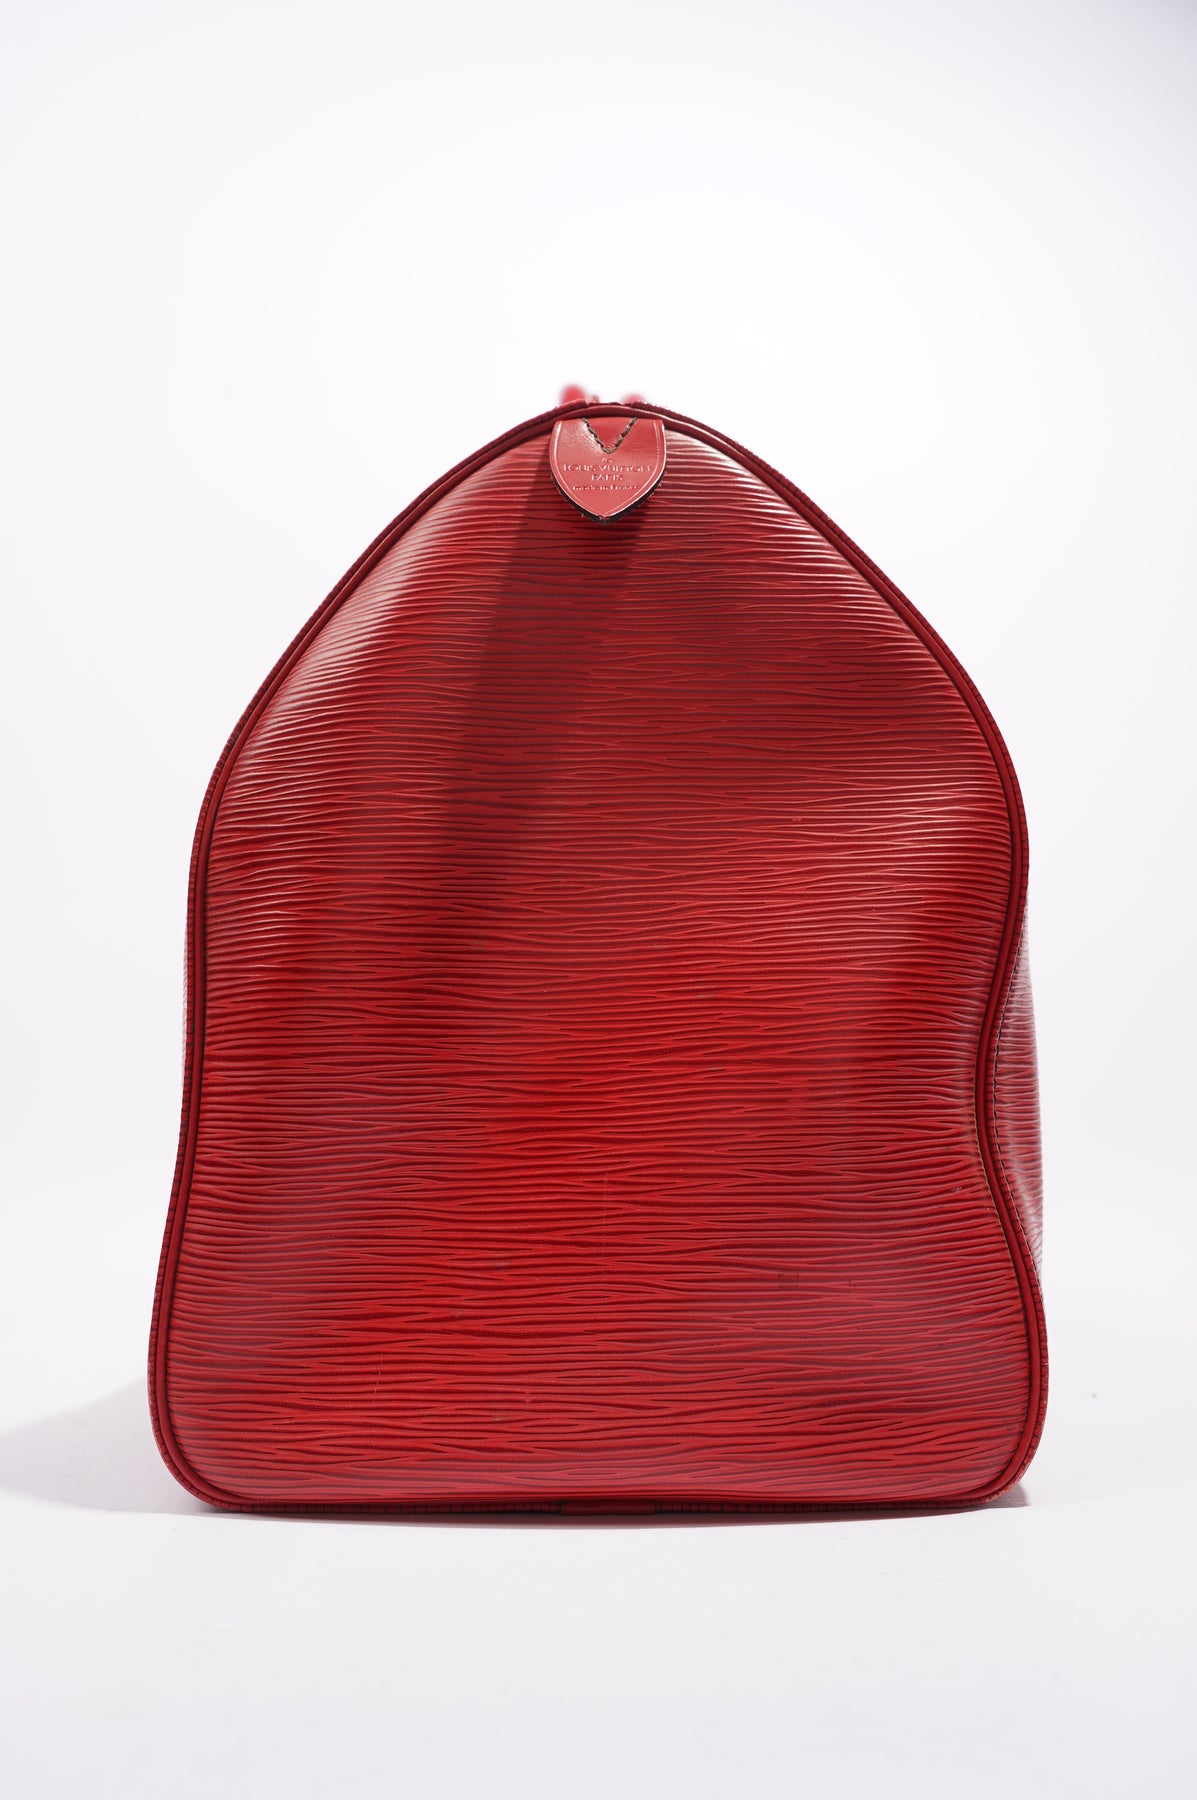 Louis Vuitton Red Epi Leather Keepall 50 Travel Bag - LAR Vintage